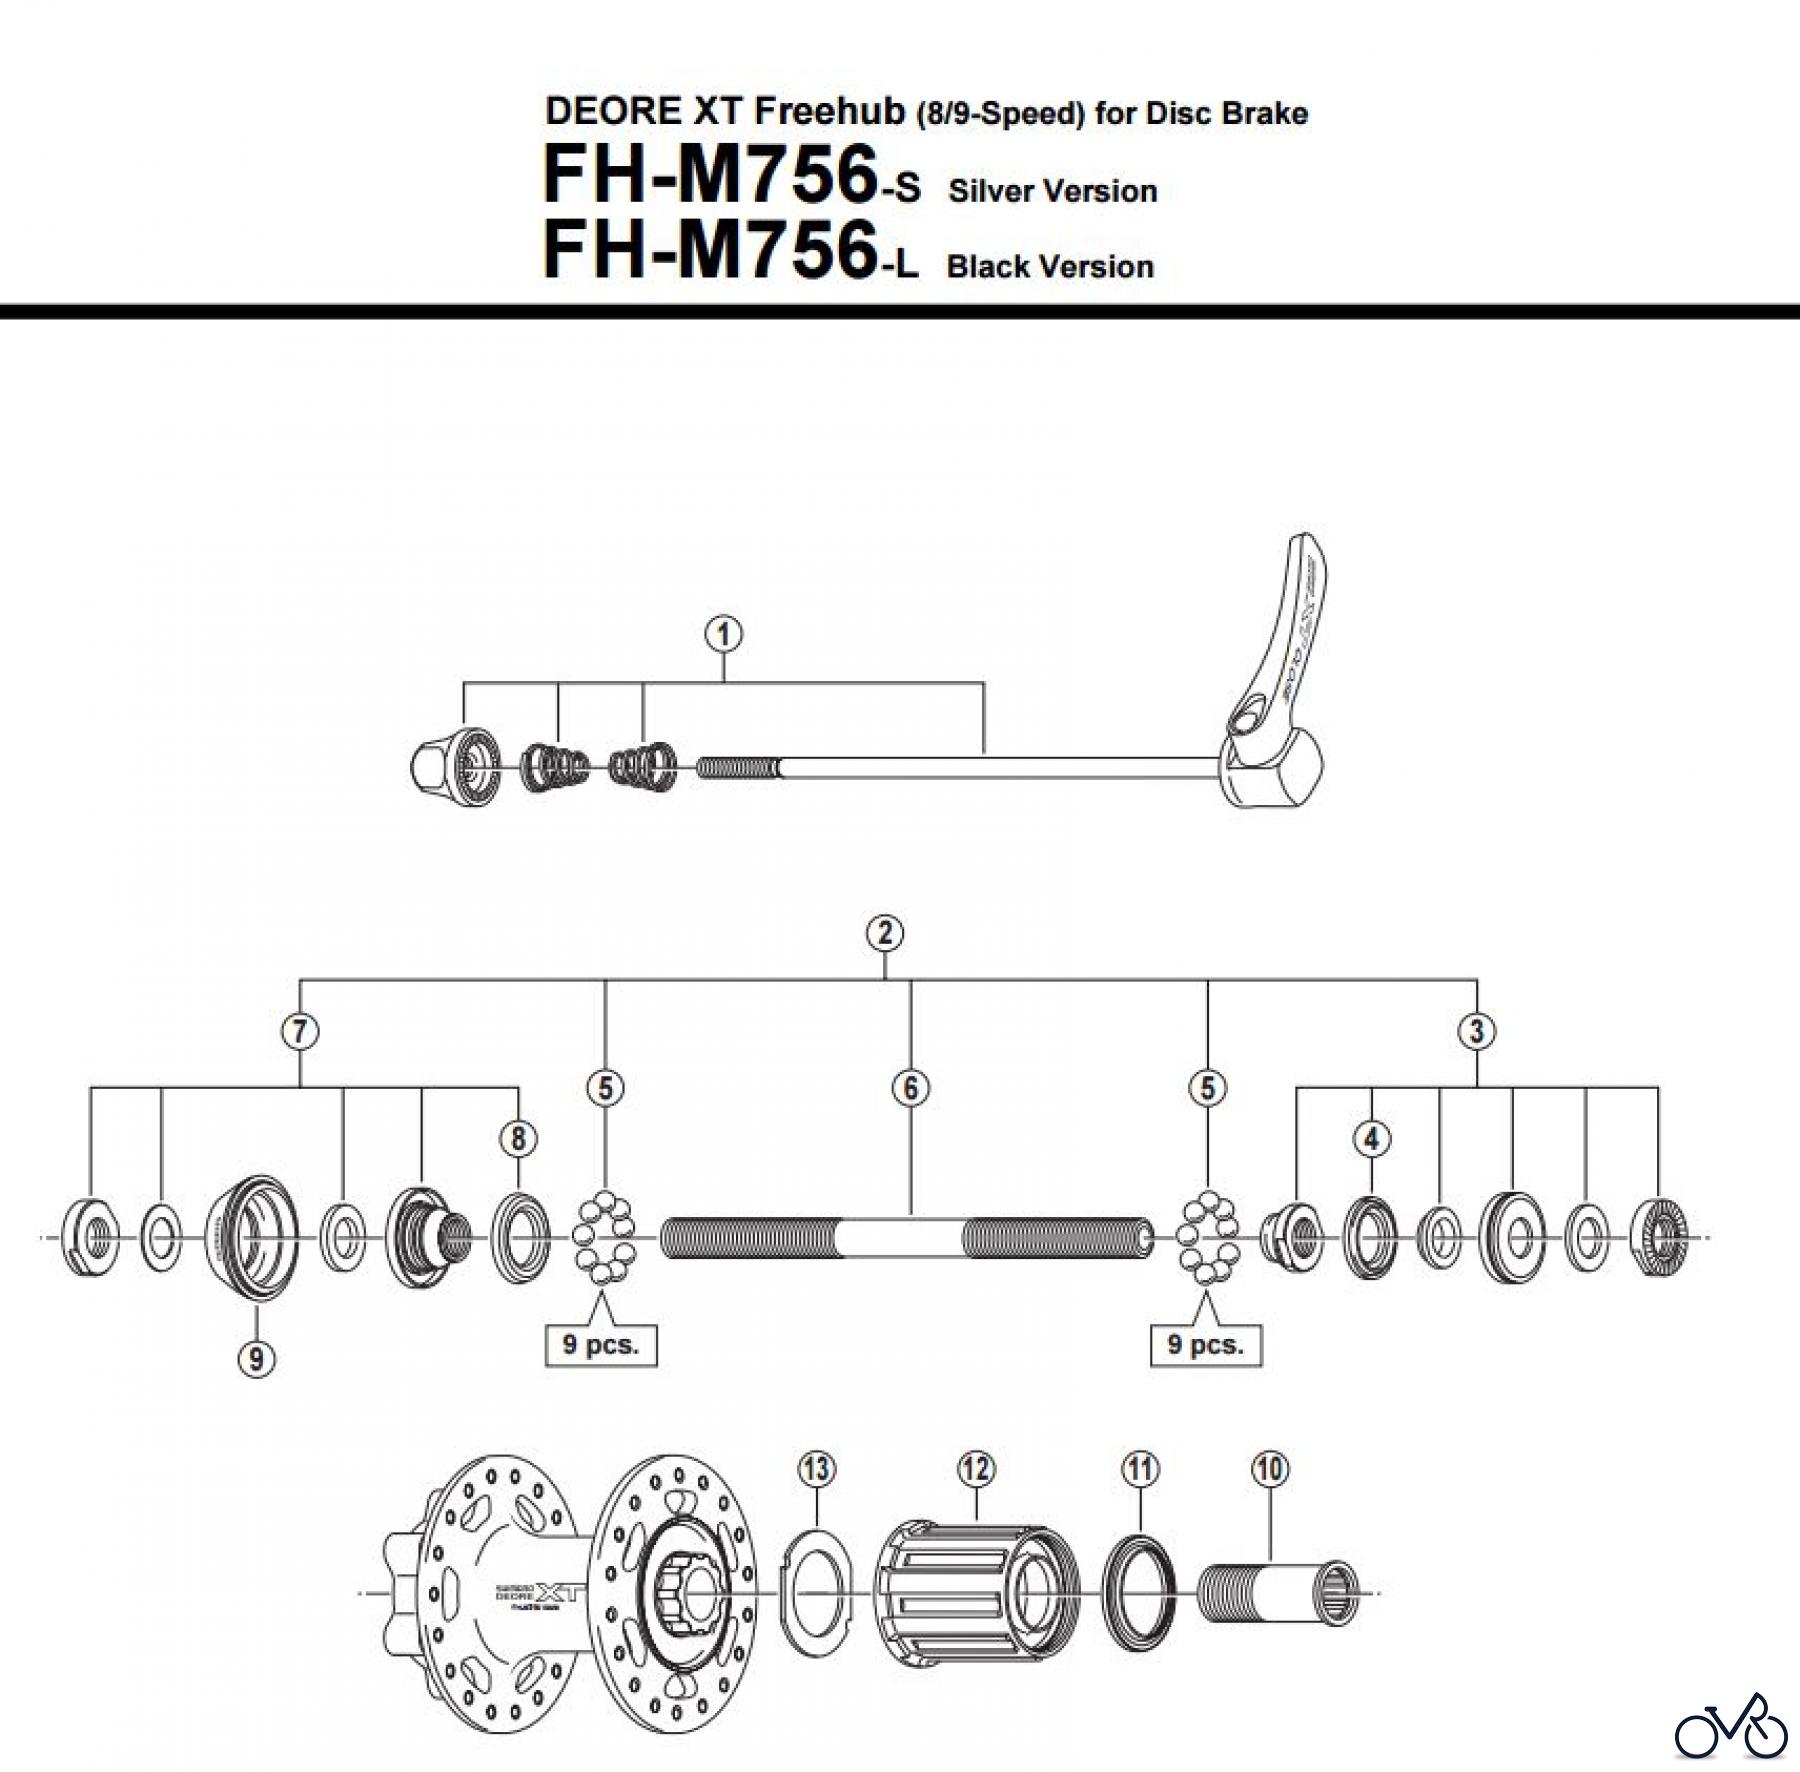  Shimano FH Free Hub - Freilaufnabe FH-M756-New Dustcap DEORE XT  Kassettennabe 8-/9-fach